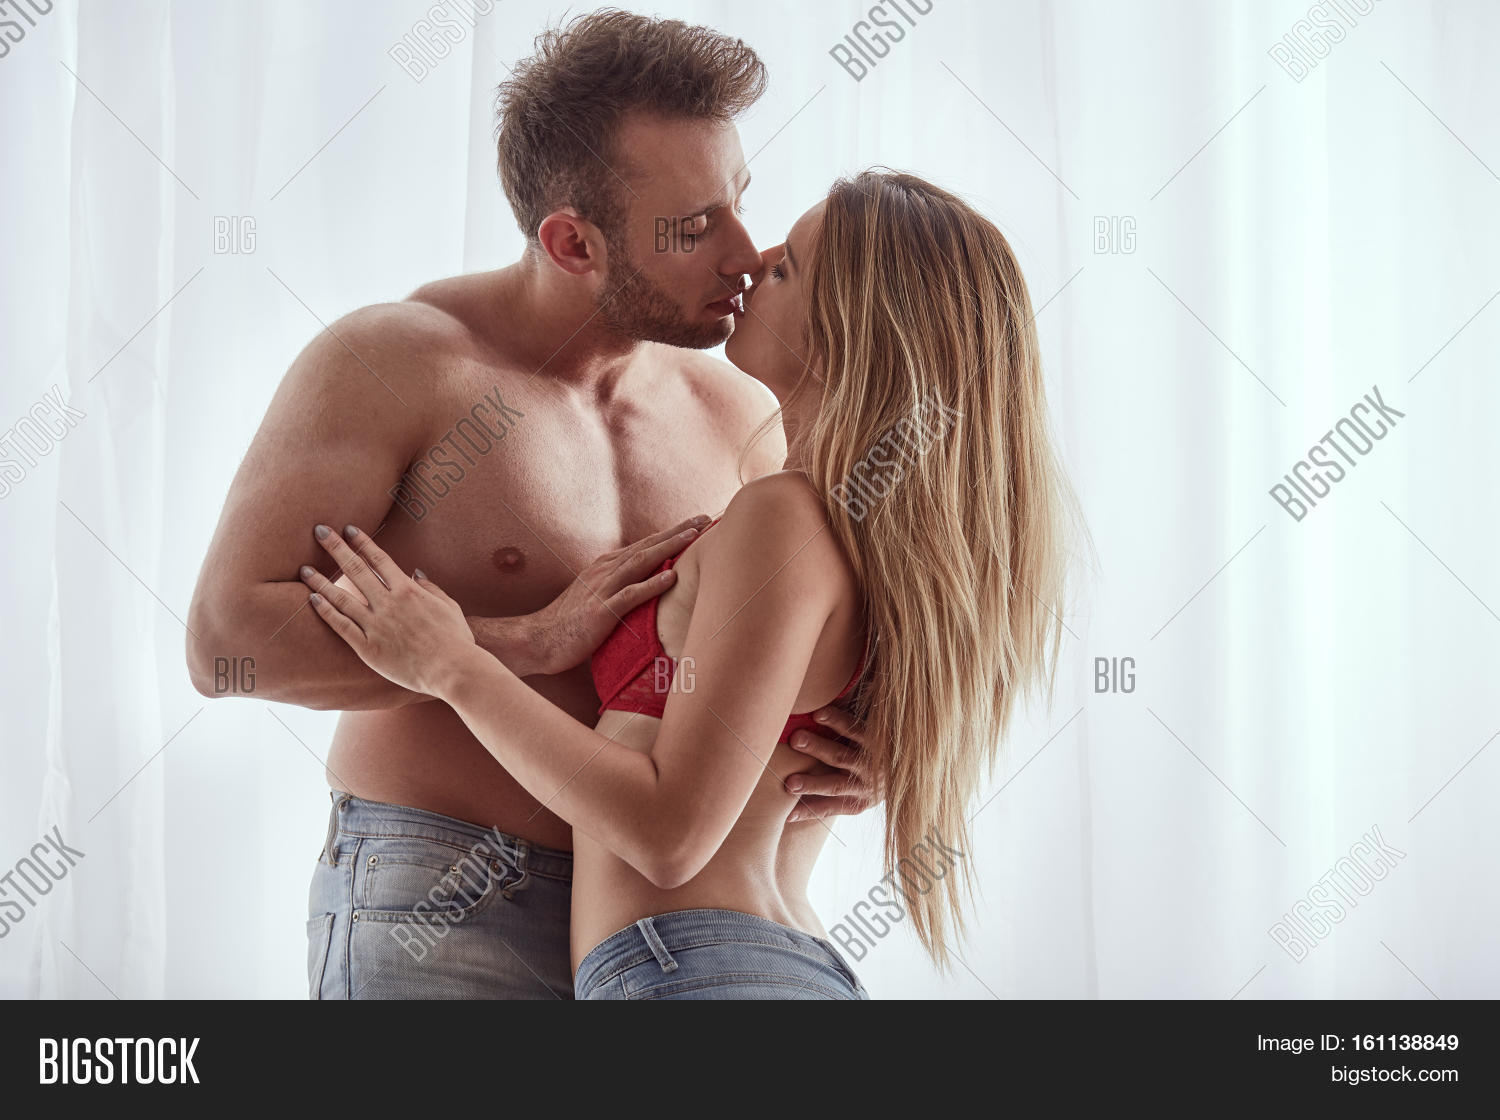 bonaga bonar add photo sexy women kissing men